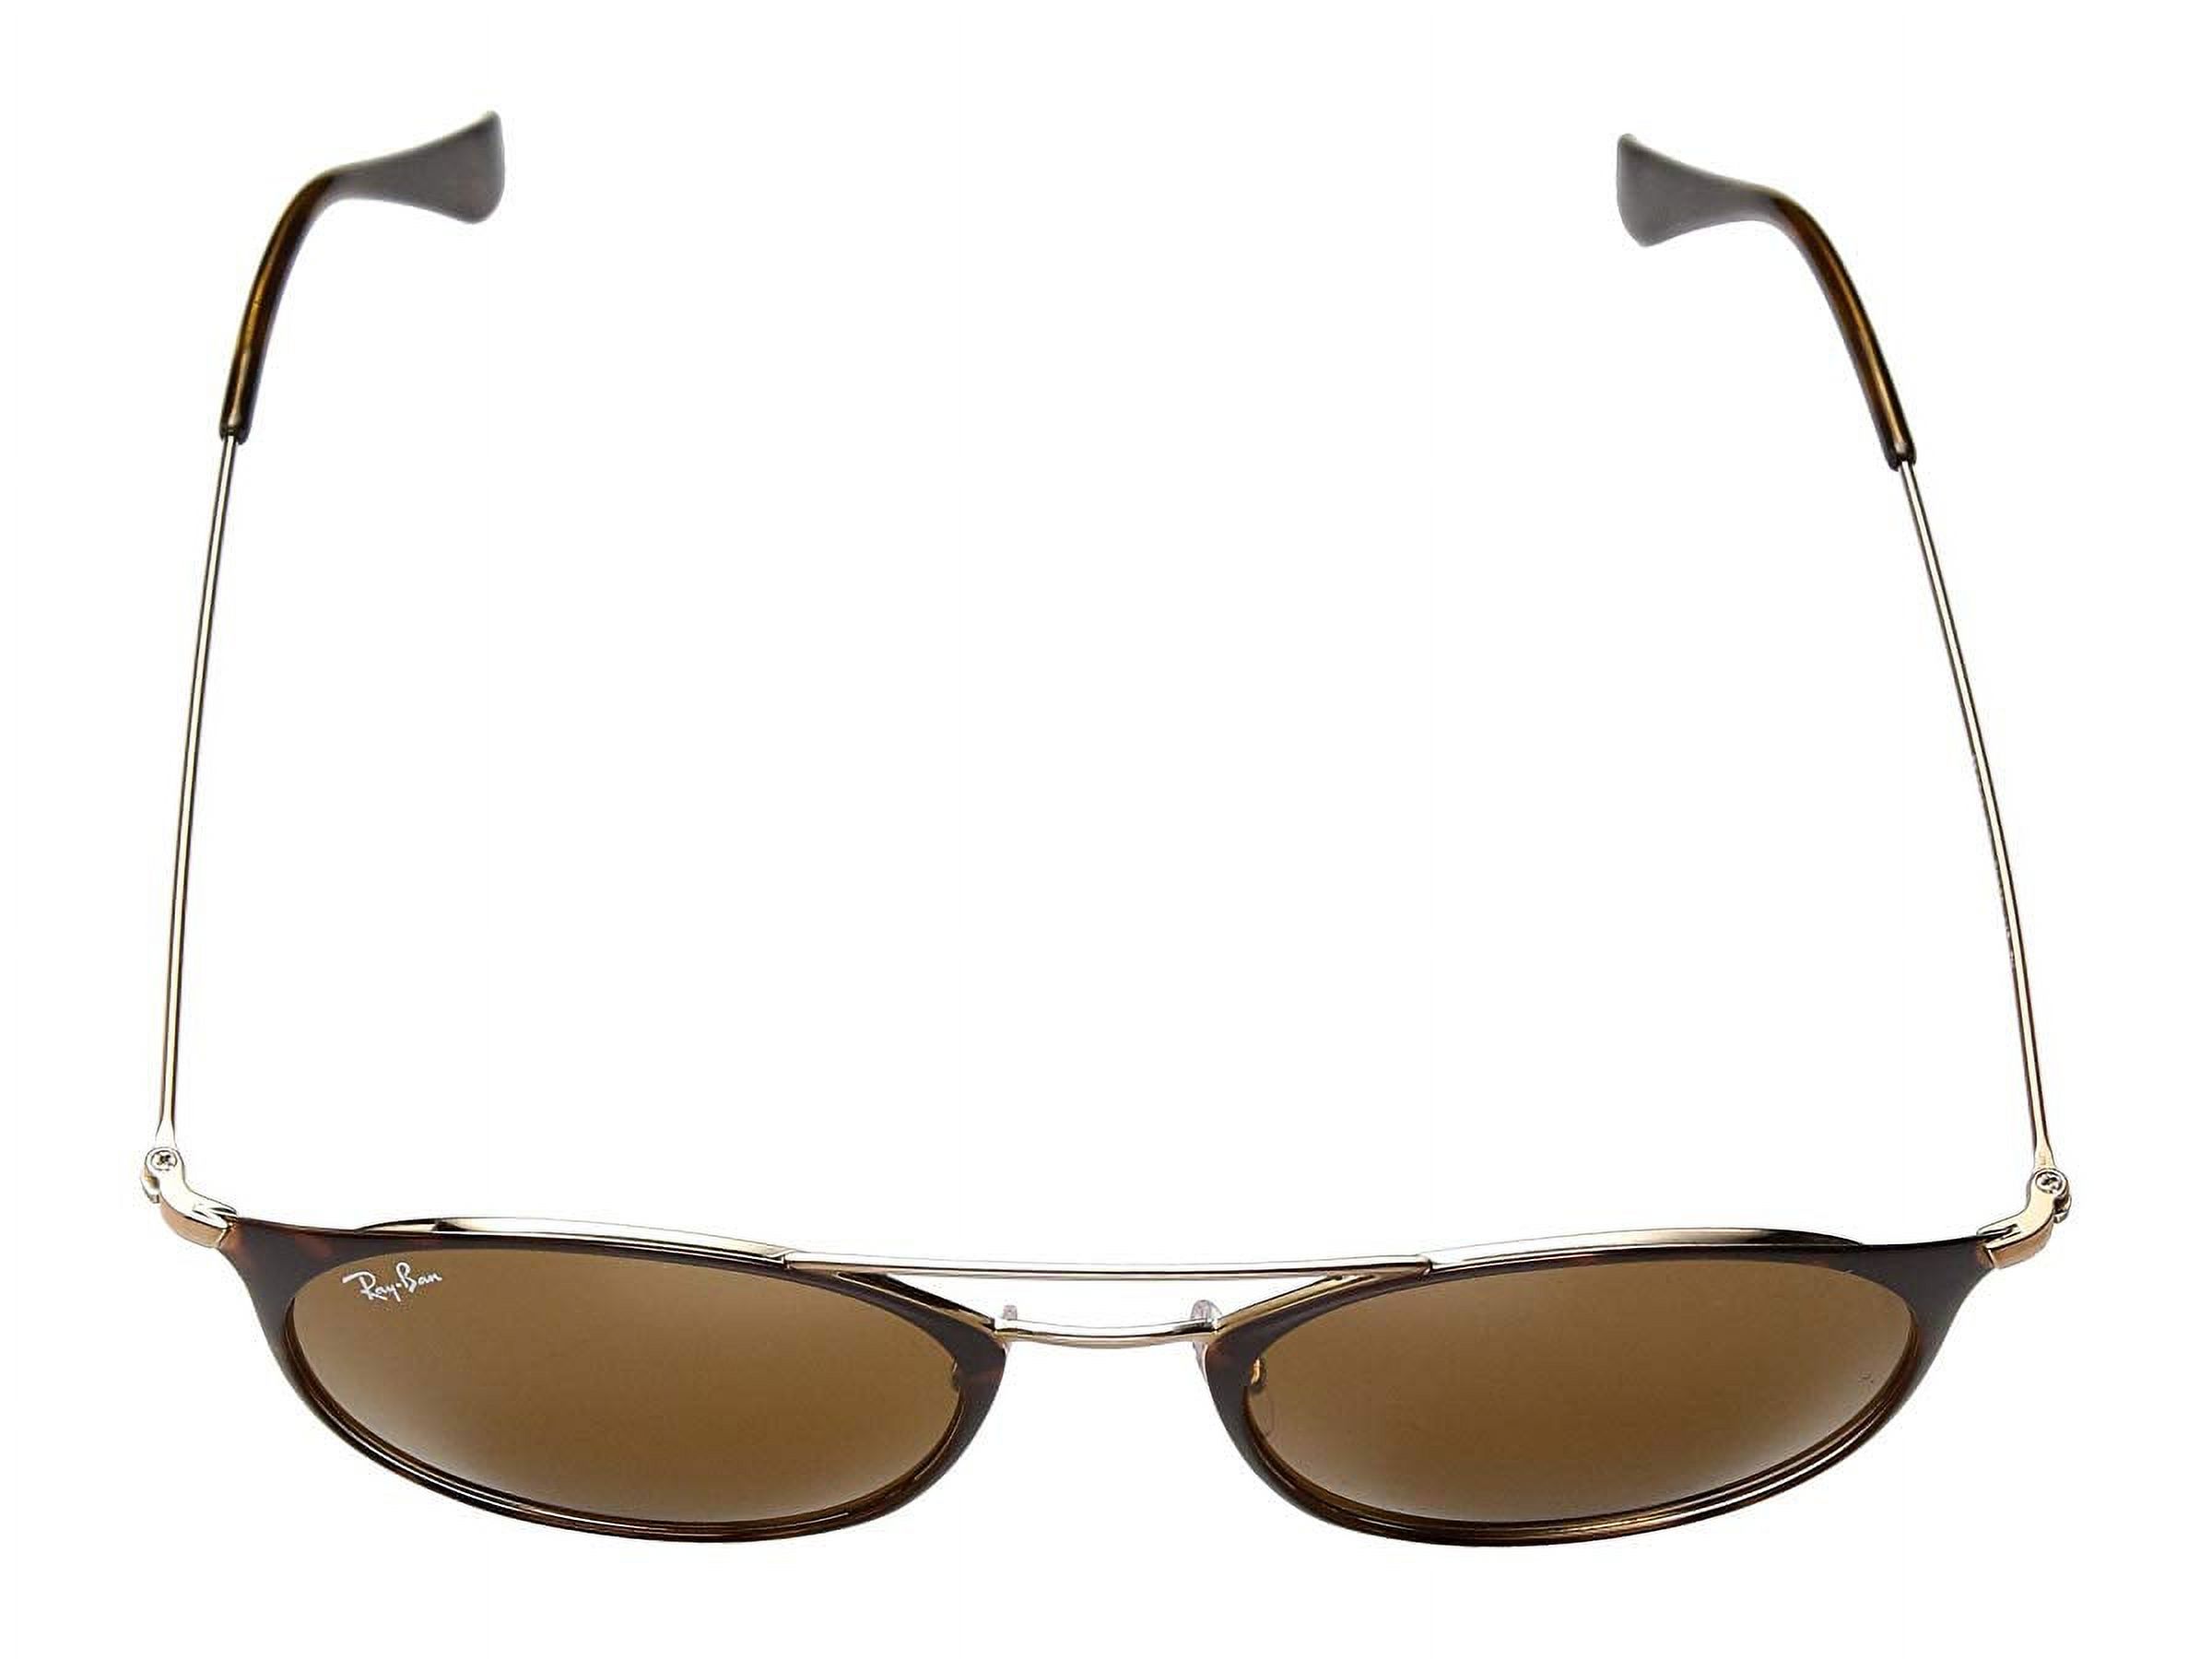 Ray-Ban RB3546 Sunglasses - image 3 of 10